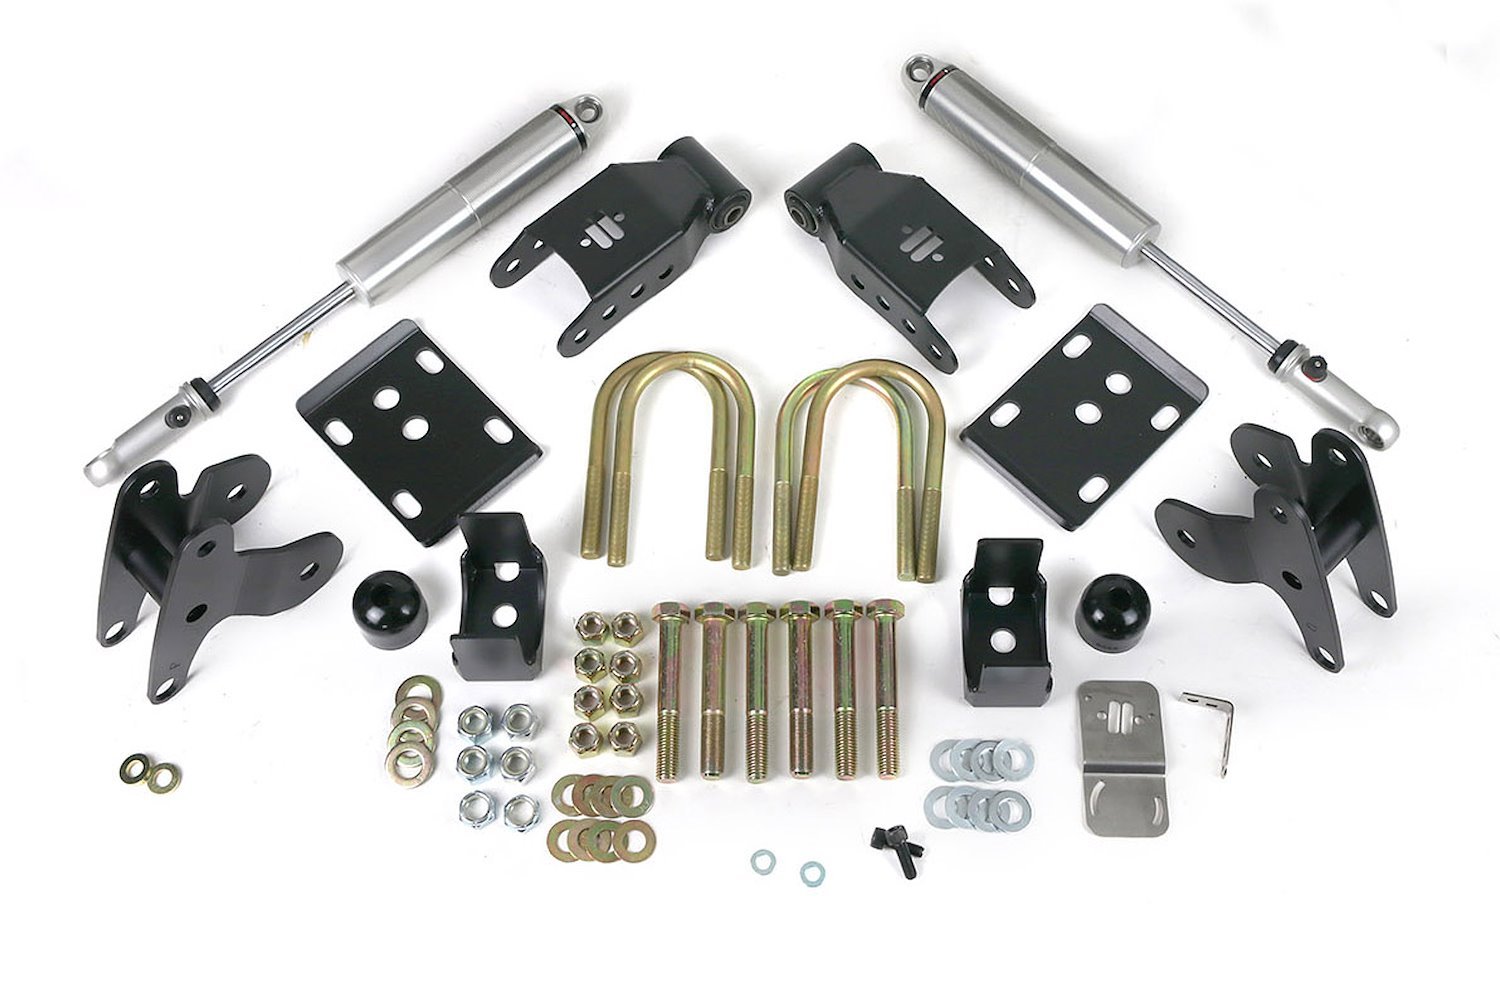 Rear Suspension Lowering Kit for Late-Model Ford F-150 Trucks